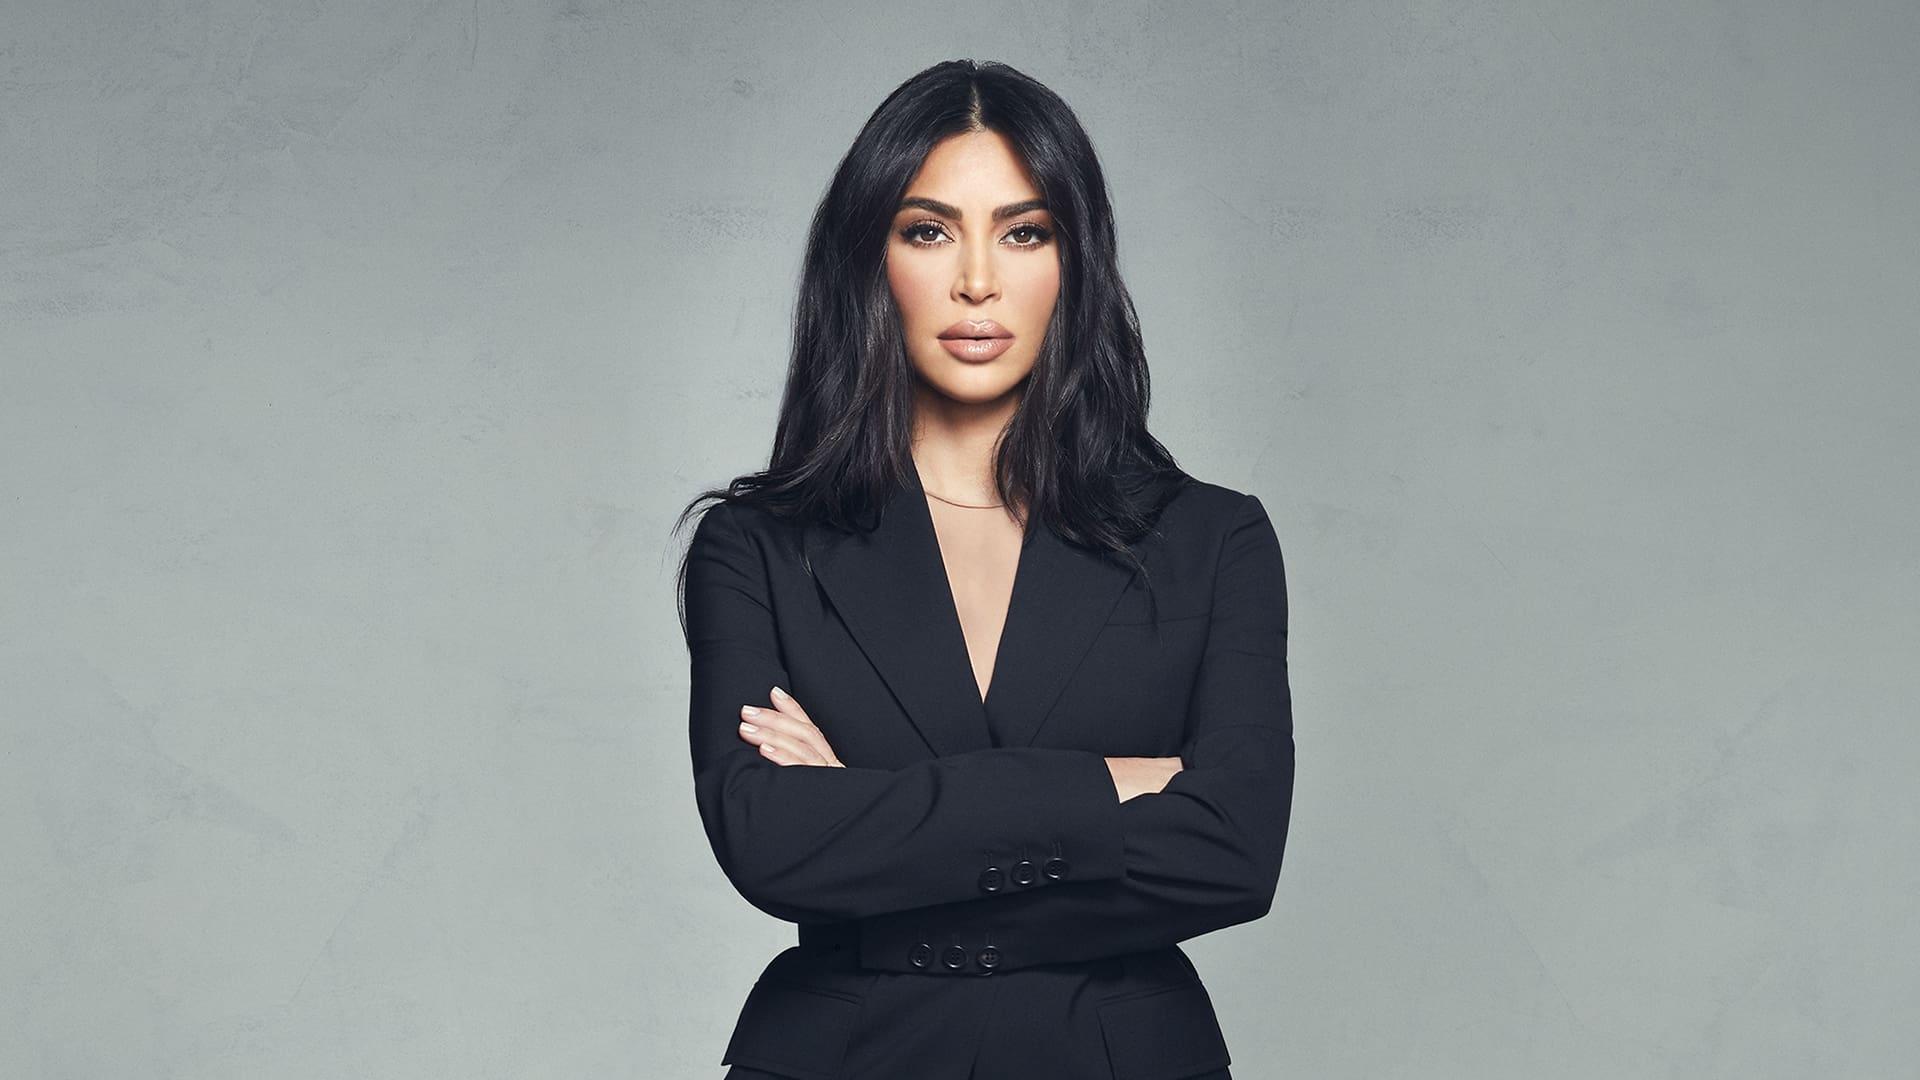 Kim Kardashian West: The Justice Project backdrop